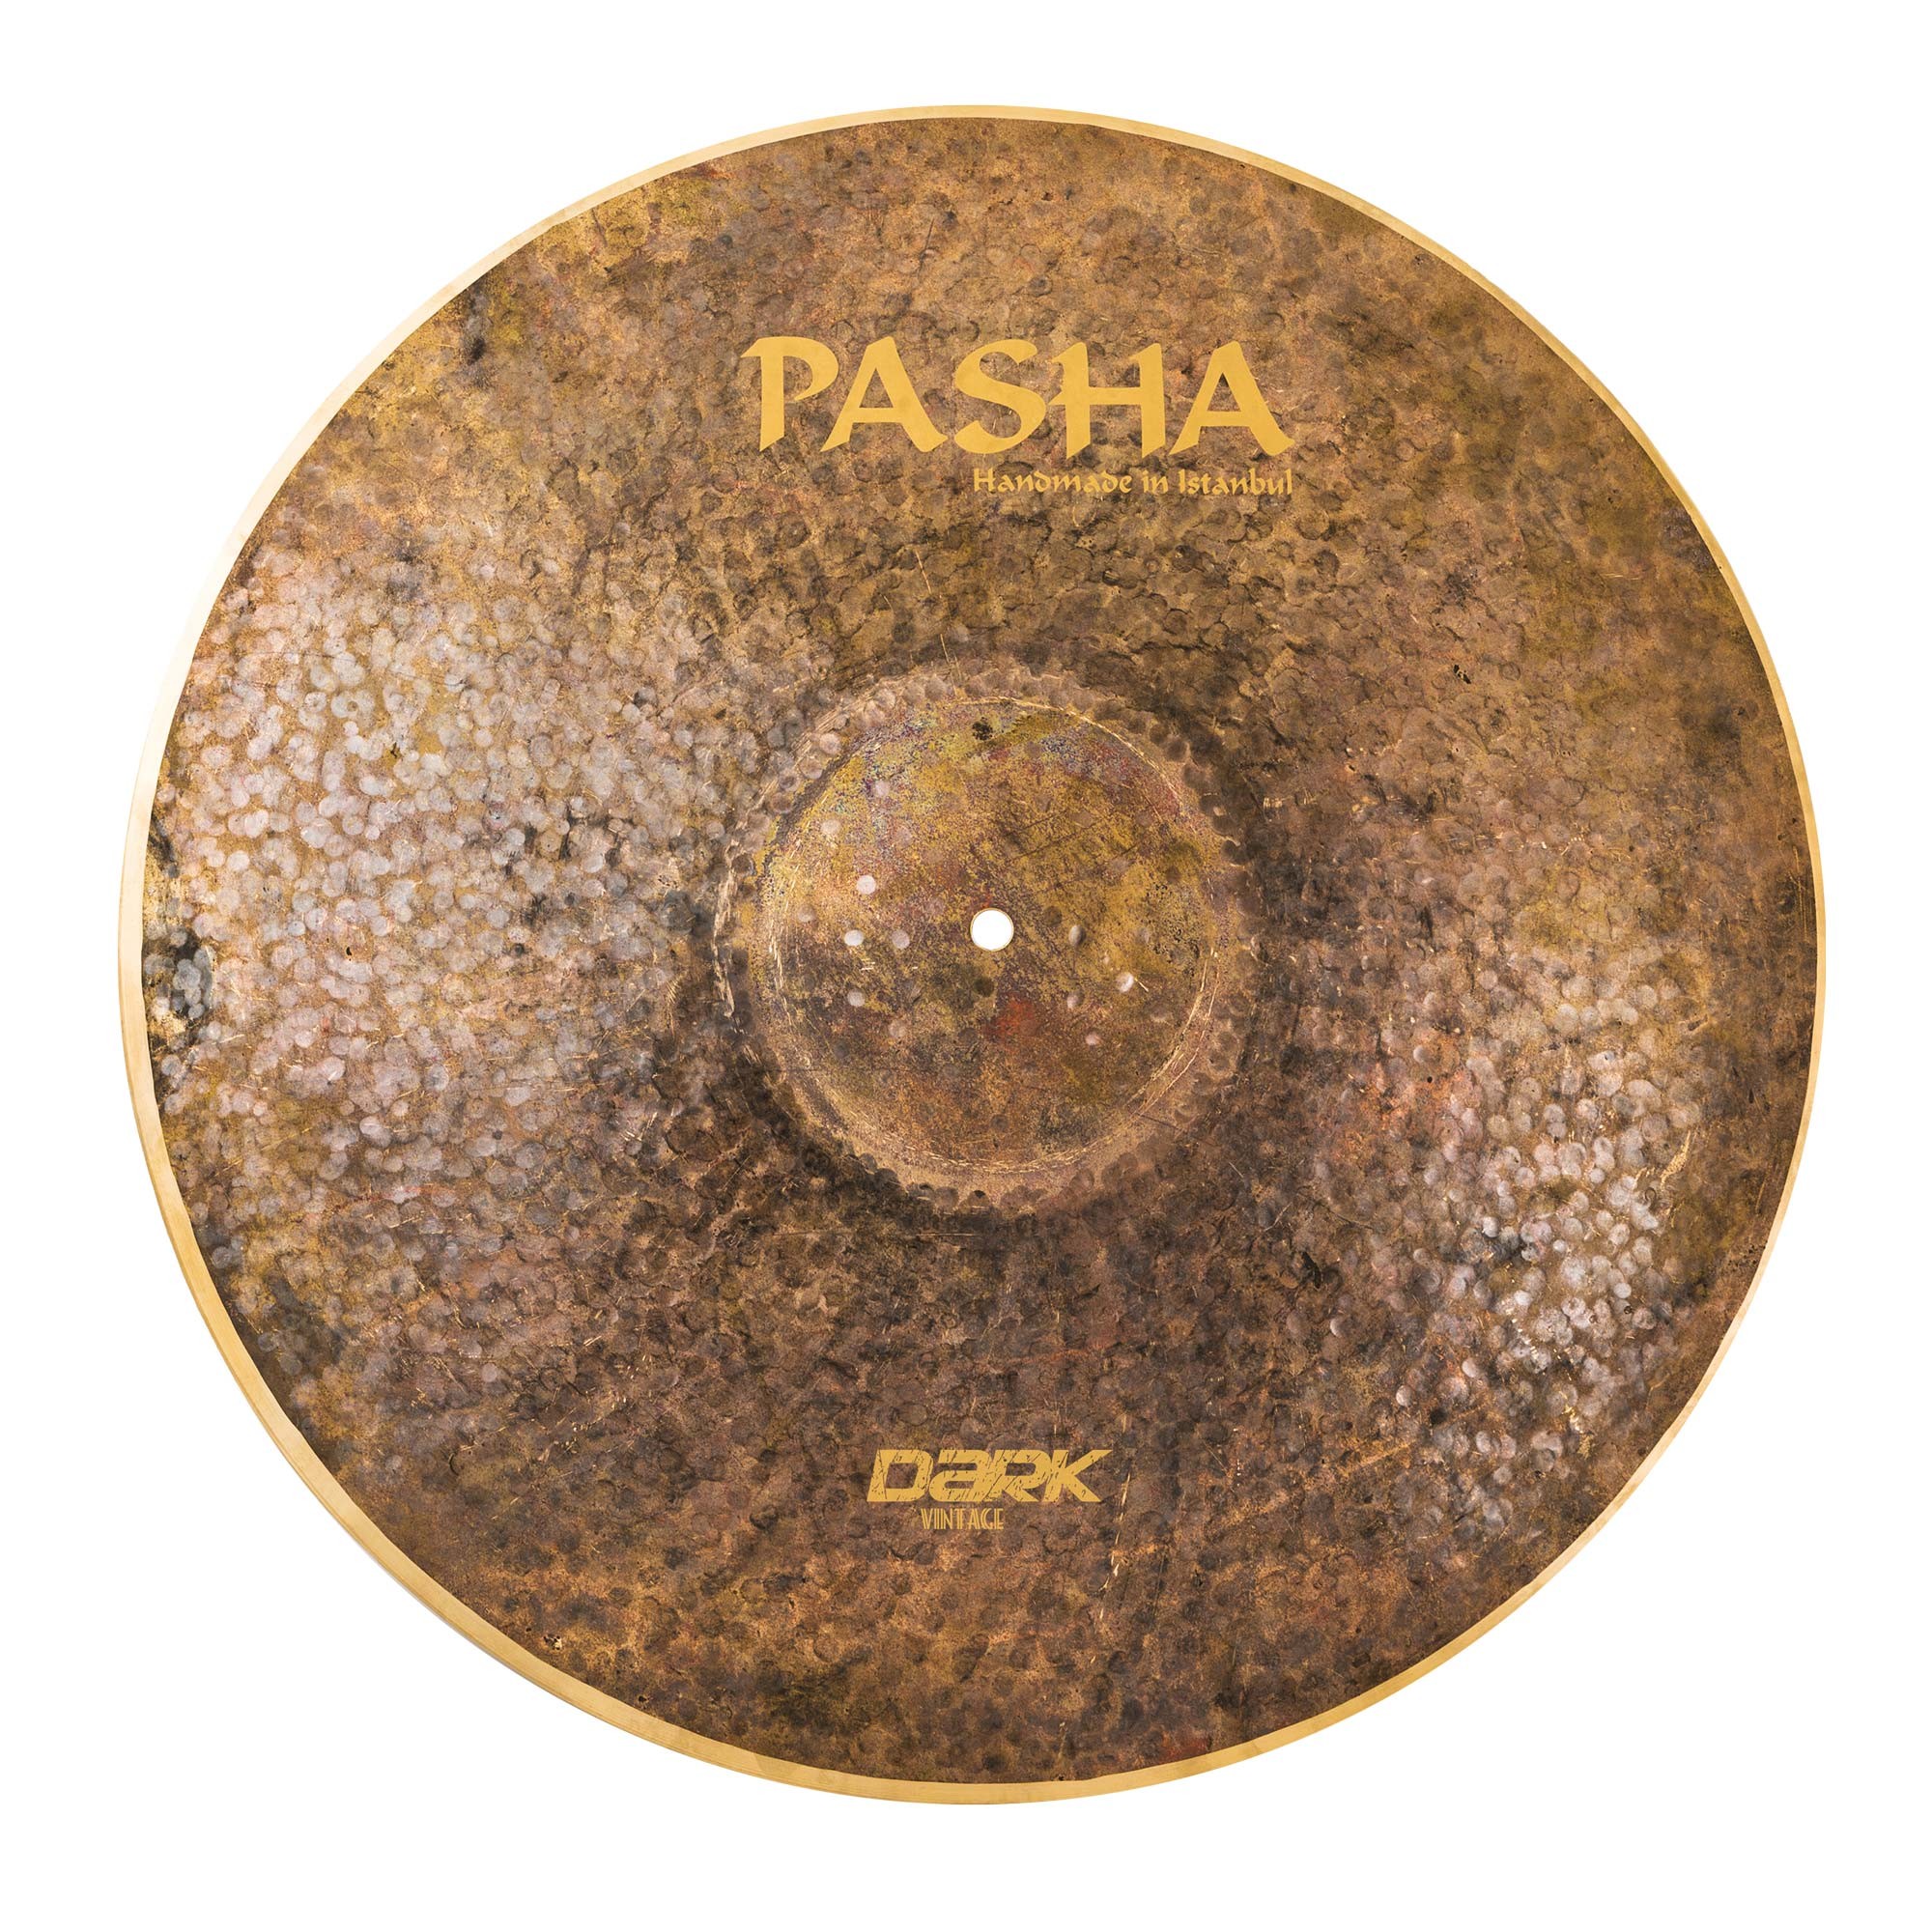 PASHA Pasha Dark Vintage Ride DVT-R20 Dimensione: 20''